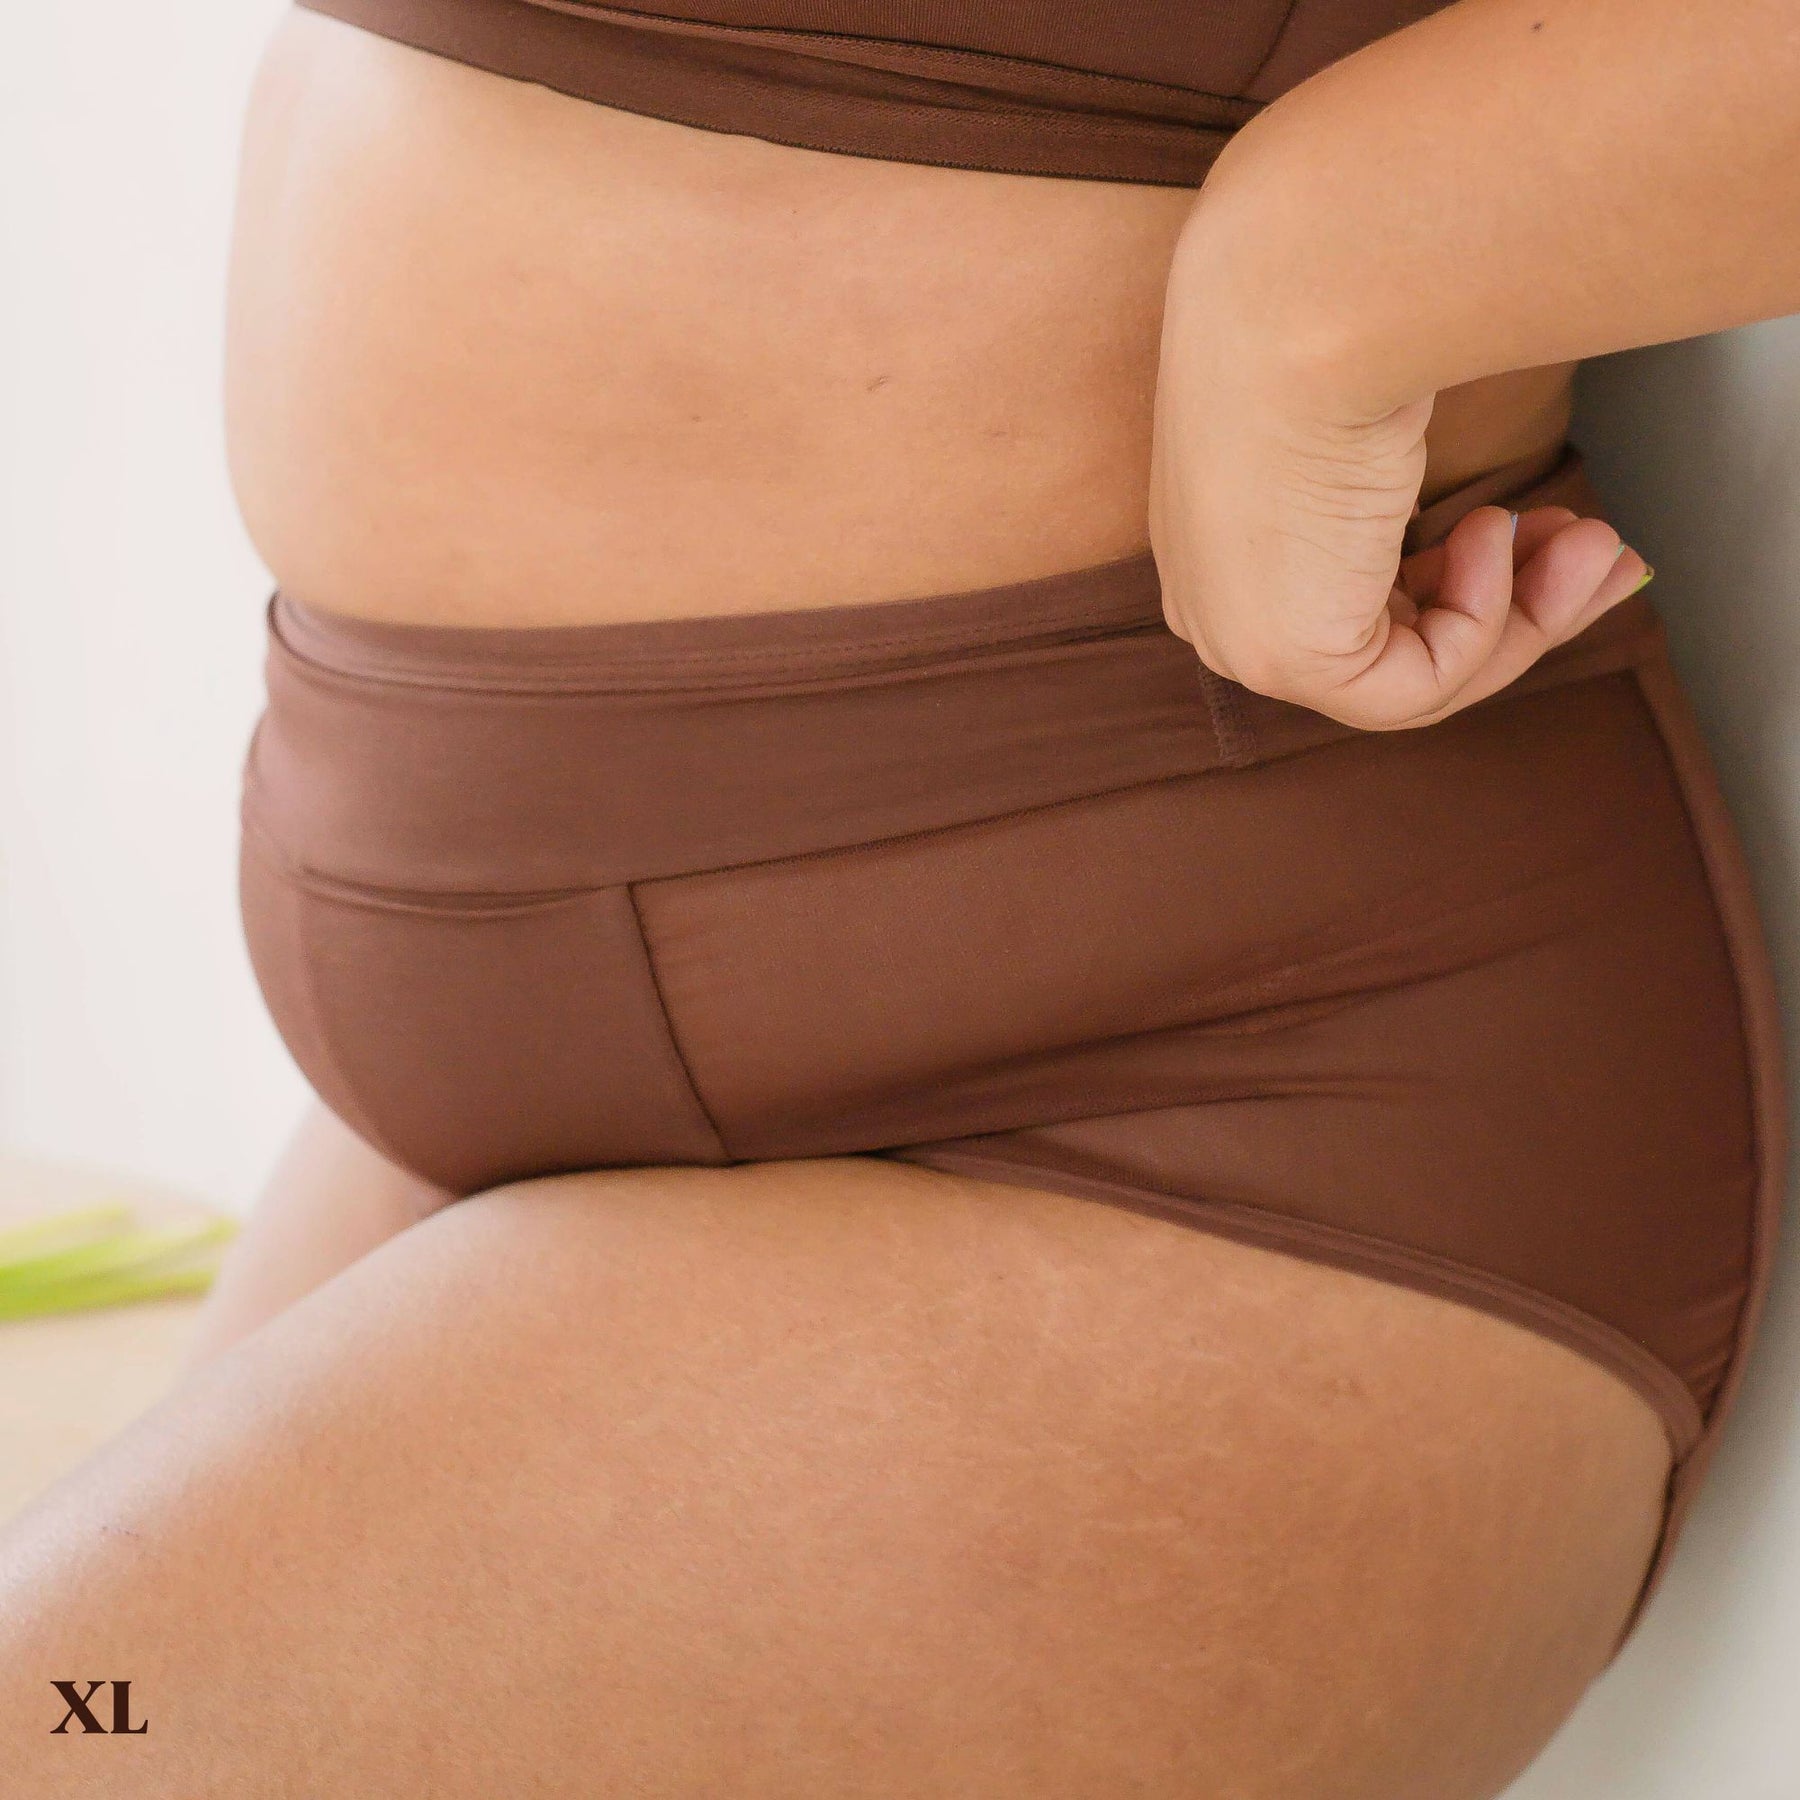 Ladies Cotton Tummy Control Panties Leak Proof Underwear Women